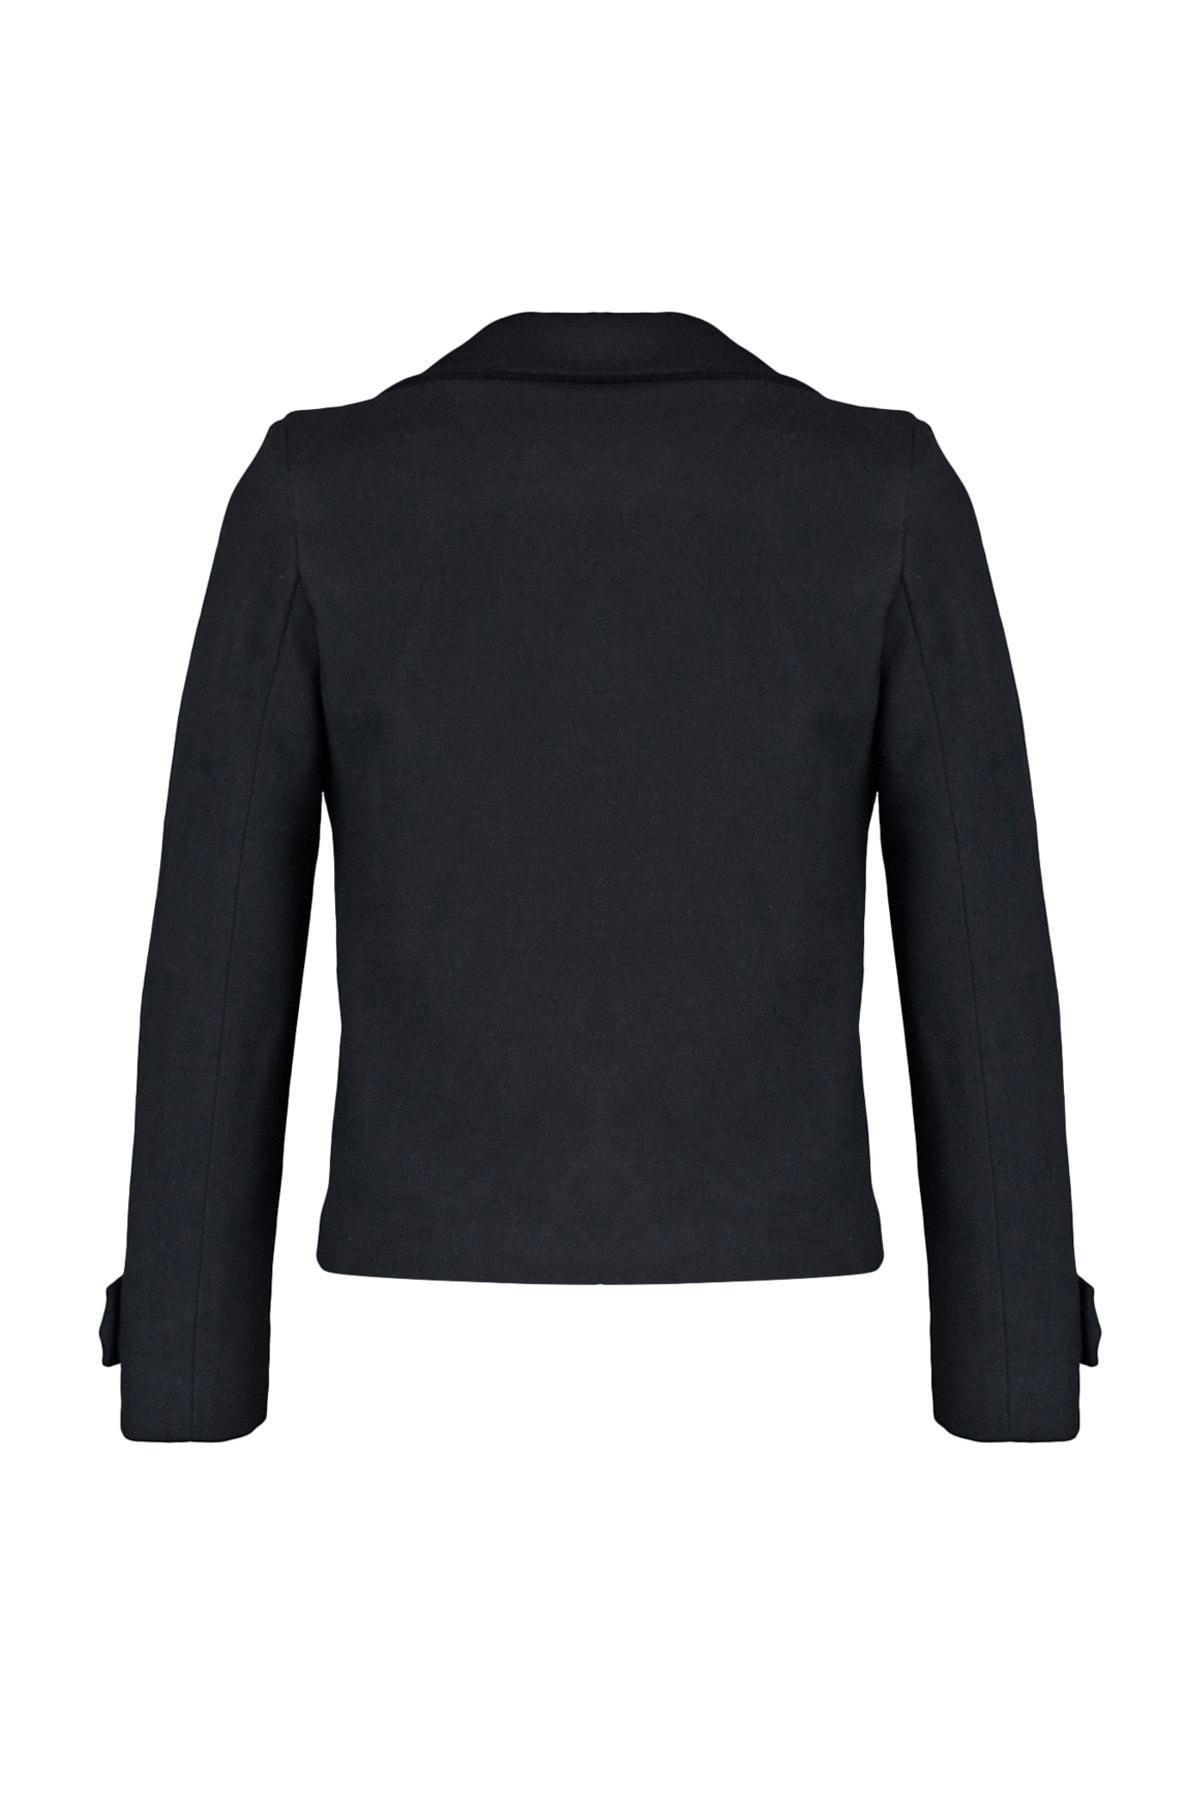 Trendyol - Black Double Breasted Coat